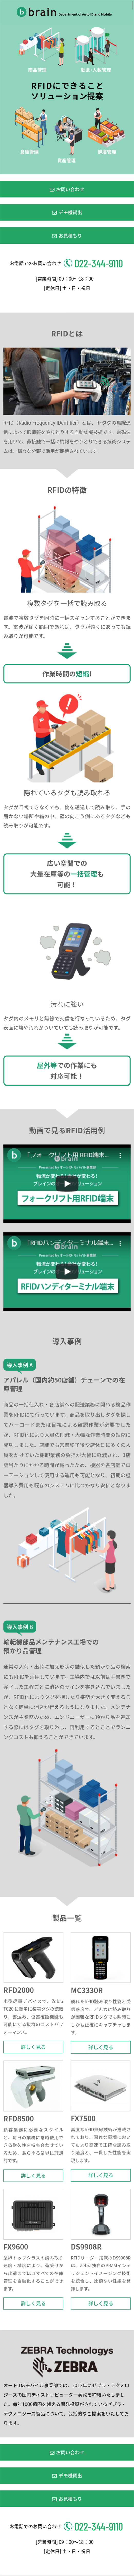 RFID_sp_1